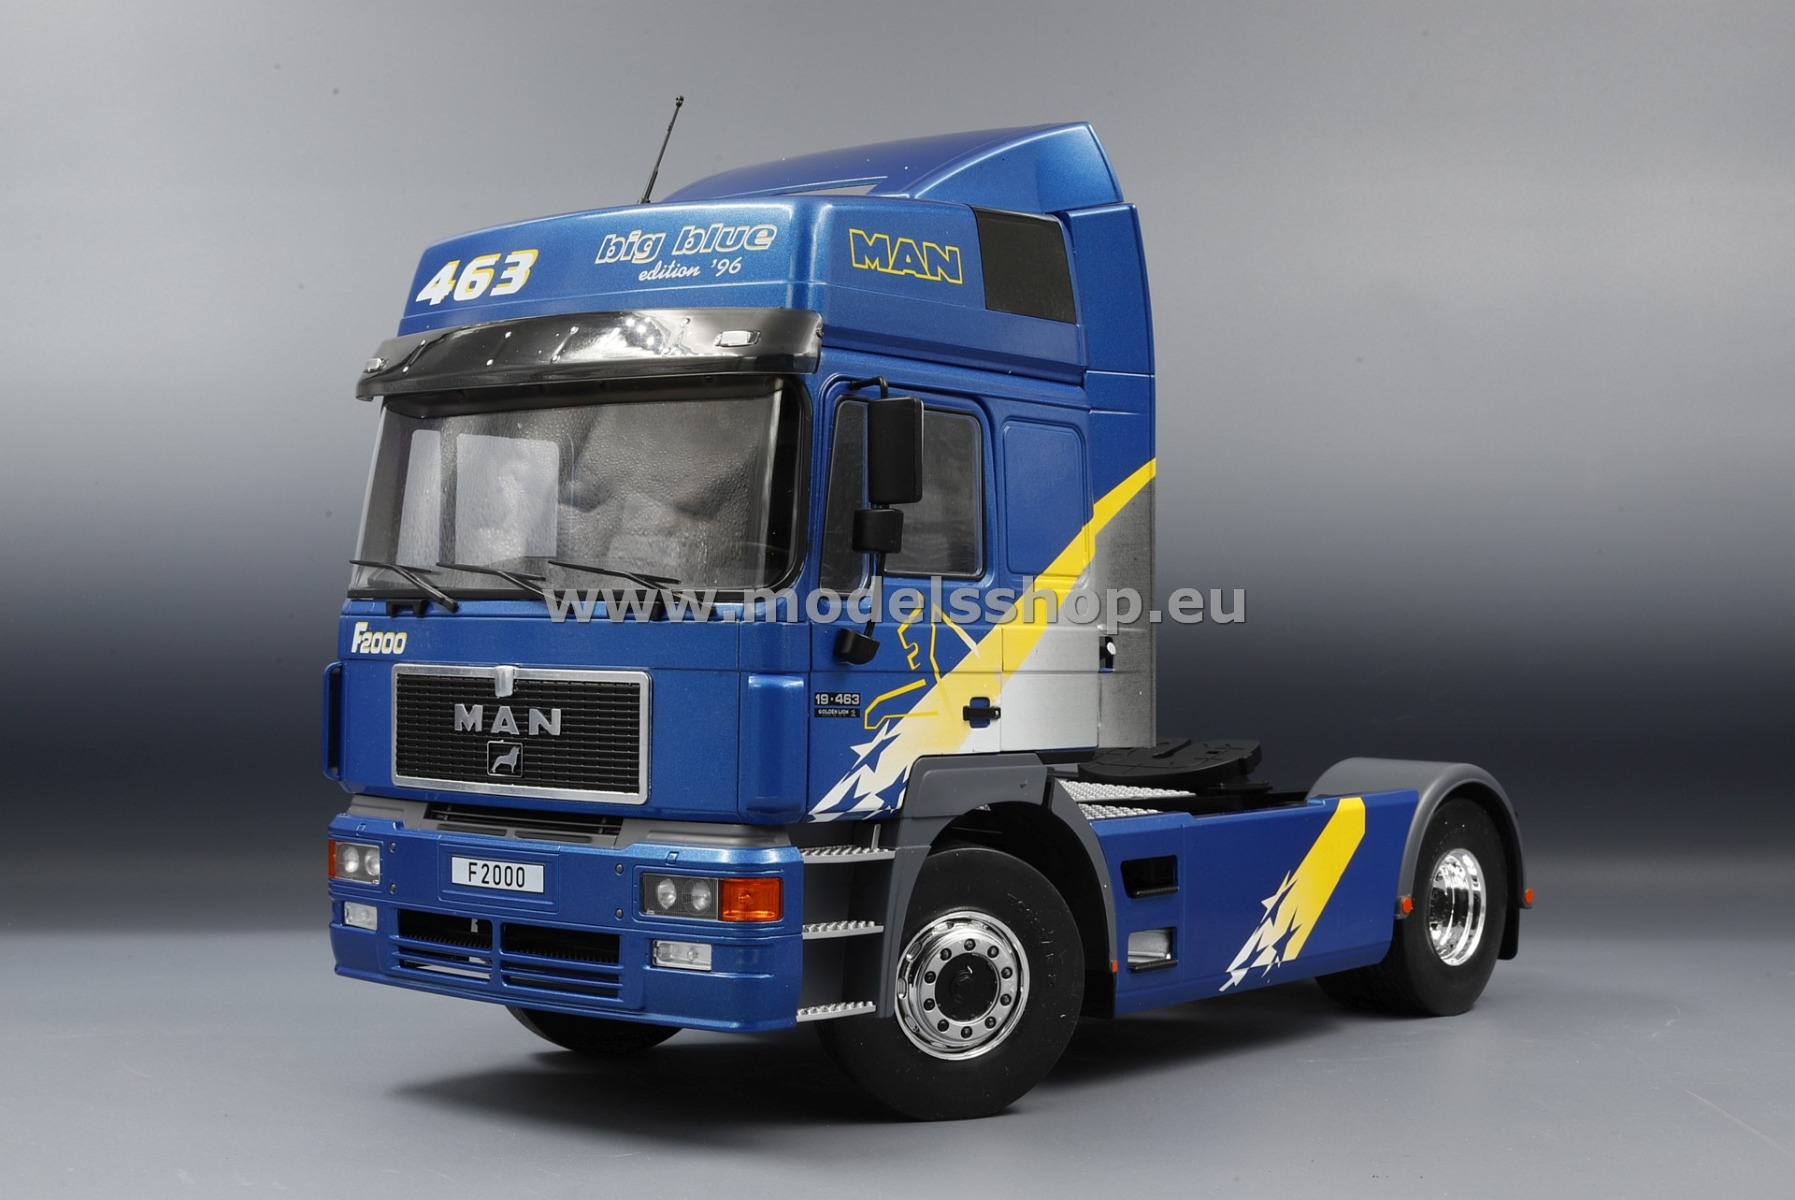 MAN F2000 tractor truck, Big Blue Edition 1994 /blue-metallic/